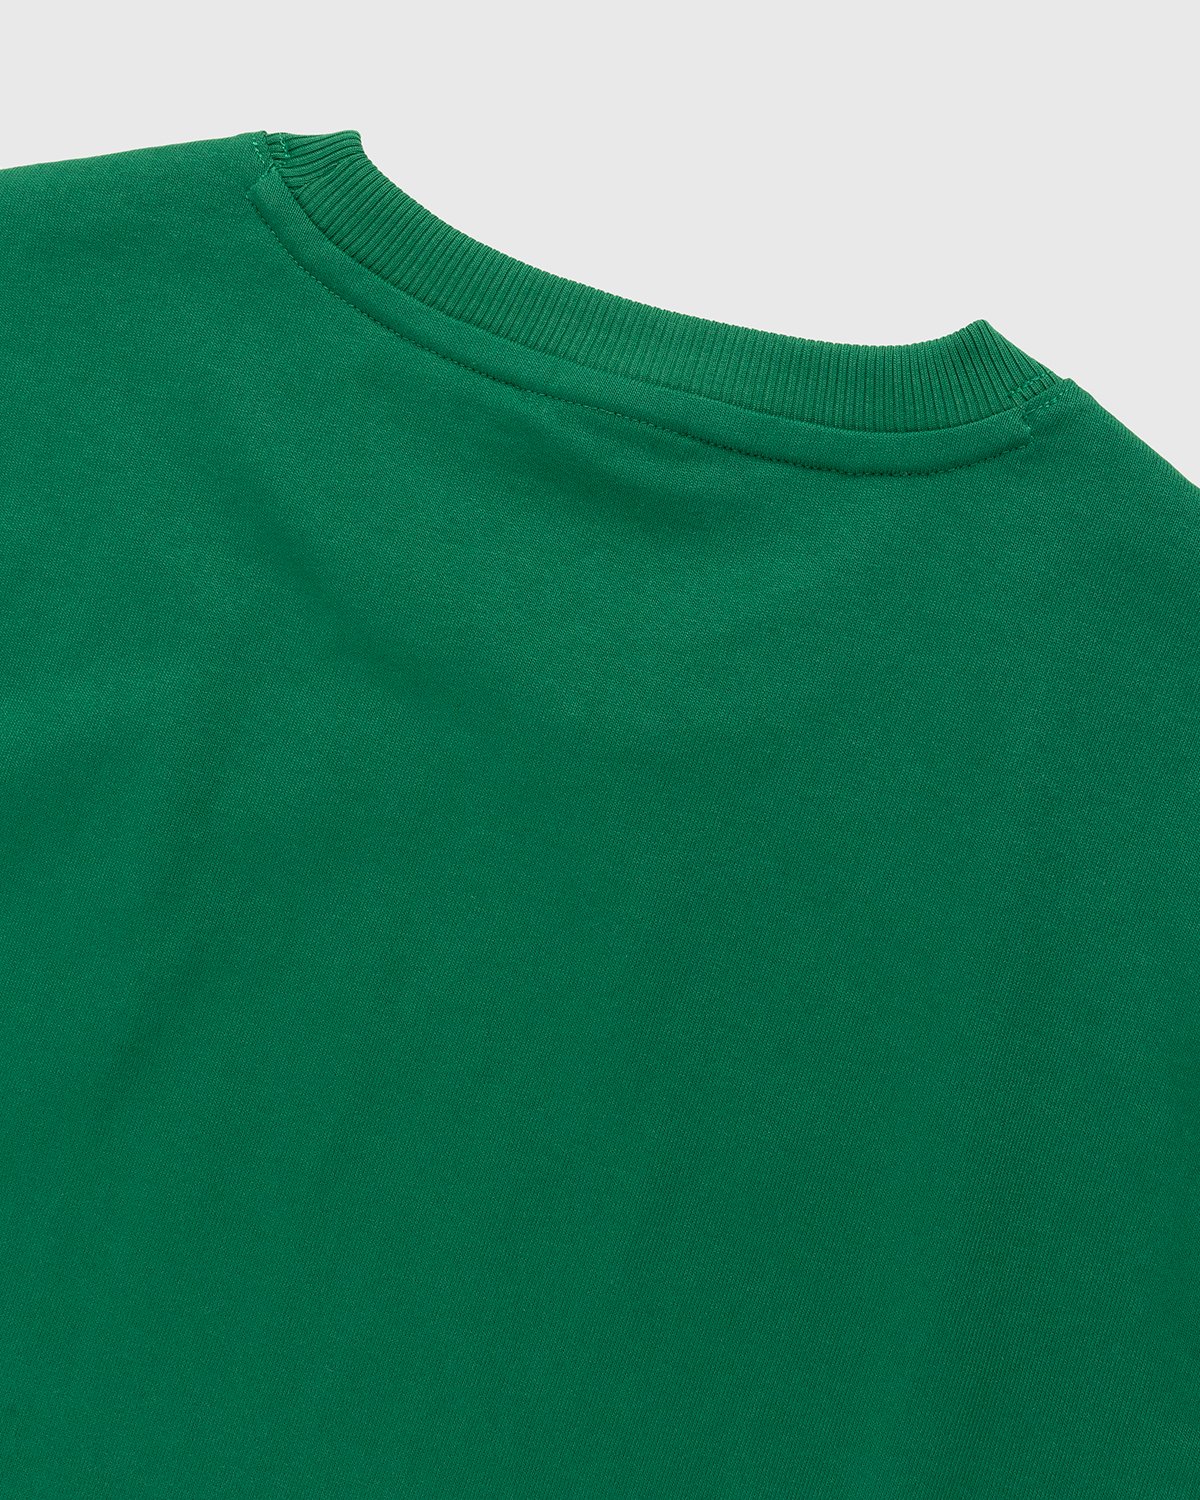 Puma x AMI - Graphic Logo Tee Verdant Green - Clothing - Green - Image 3